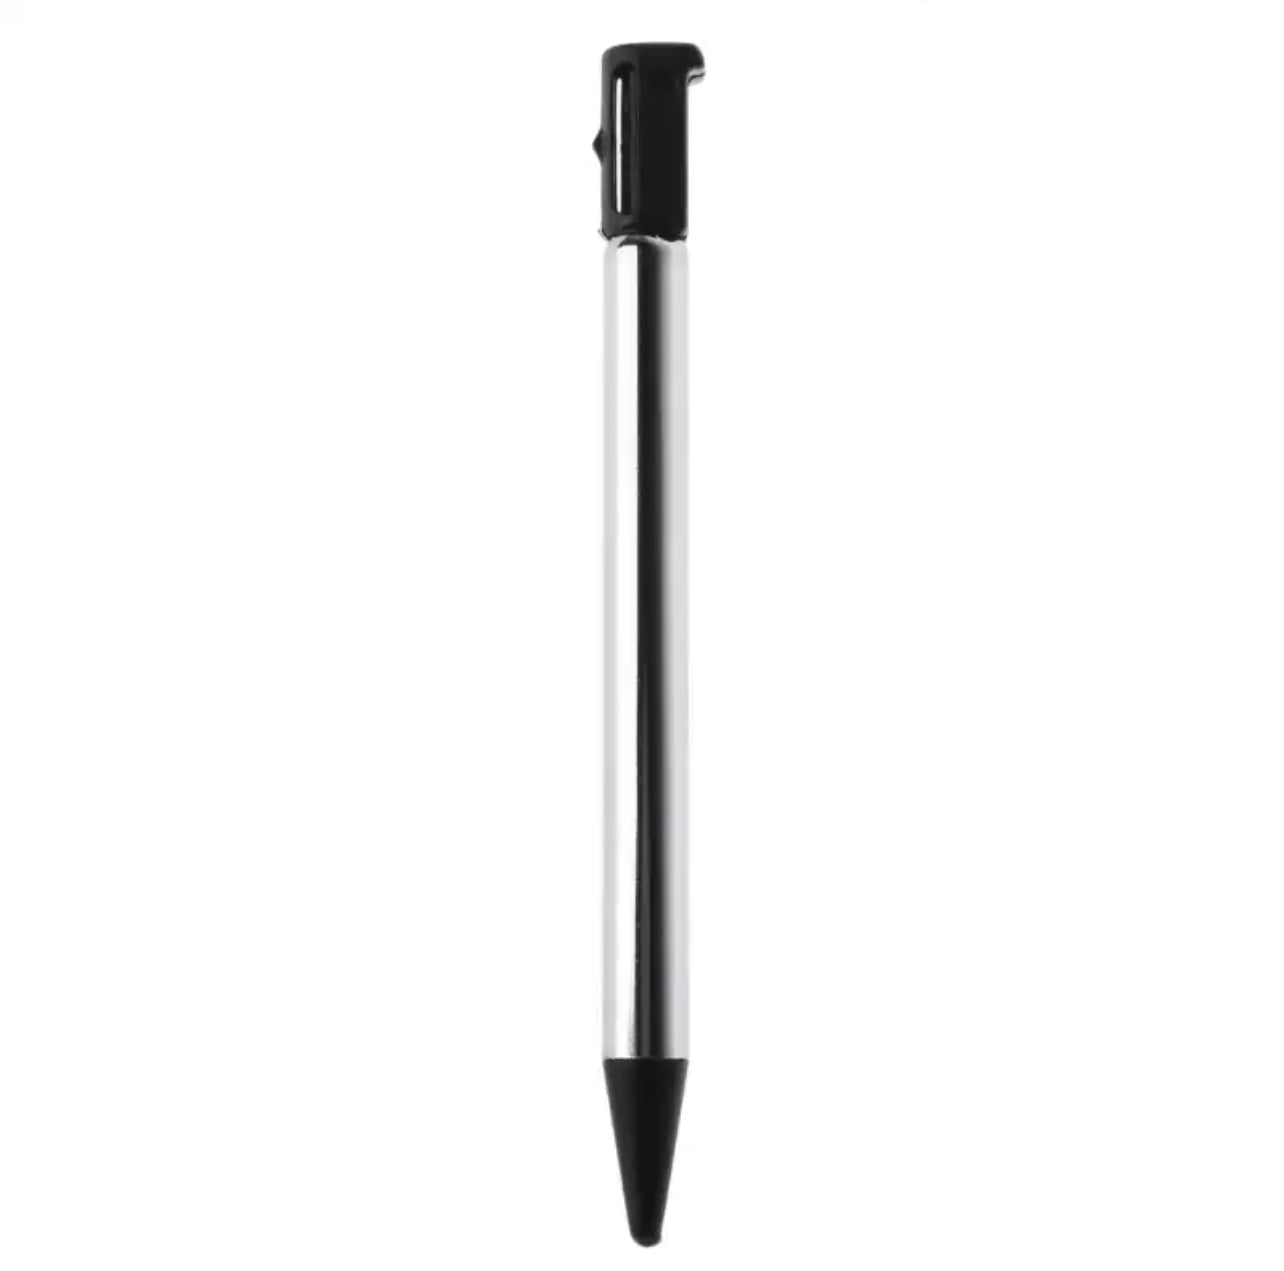 Nintendo 3DS Adjustable Stylus Pen - Black